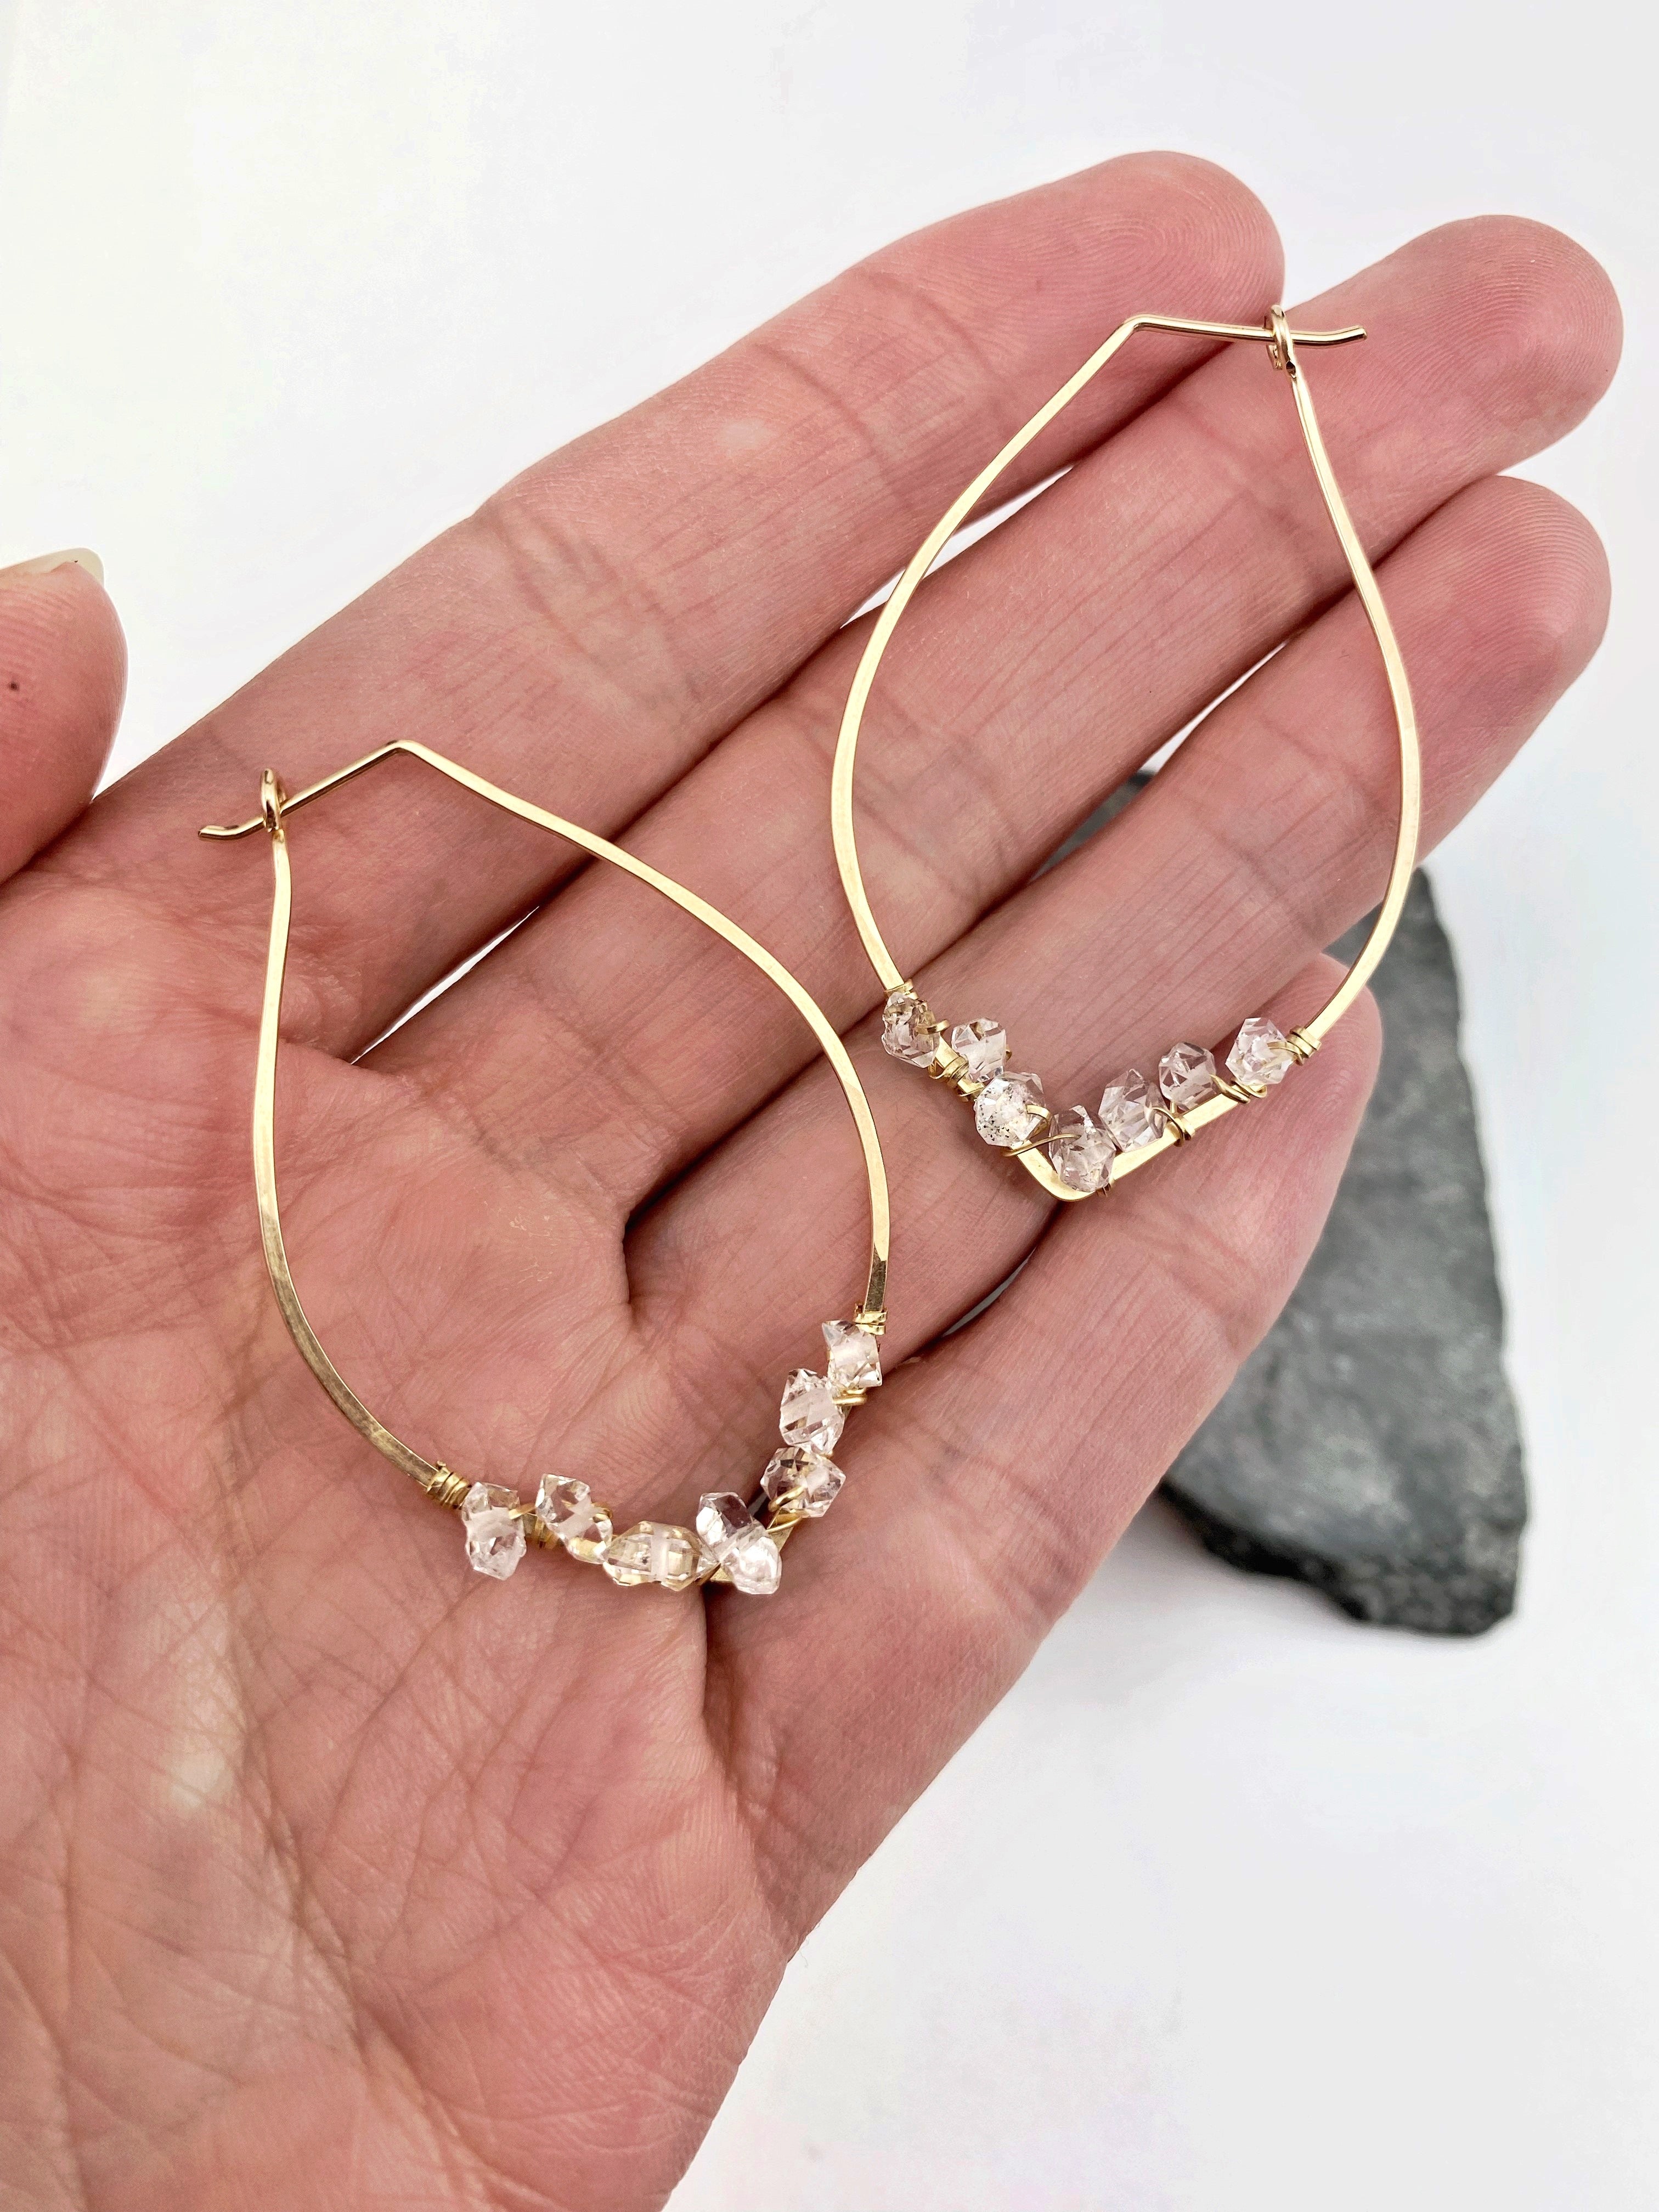 Hammered Gold Petal Hoop Earrings with Wrapped Herkimer Diamonds, minimalist earrings, delicate earrings, gold earrings, petal hoops